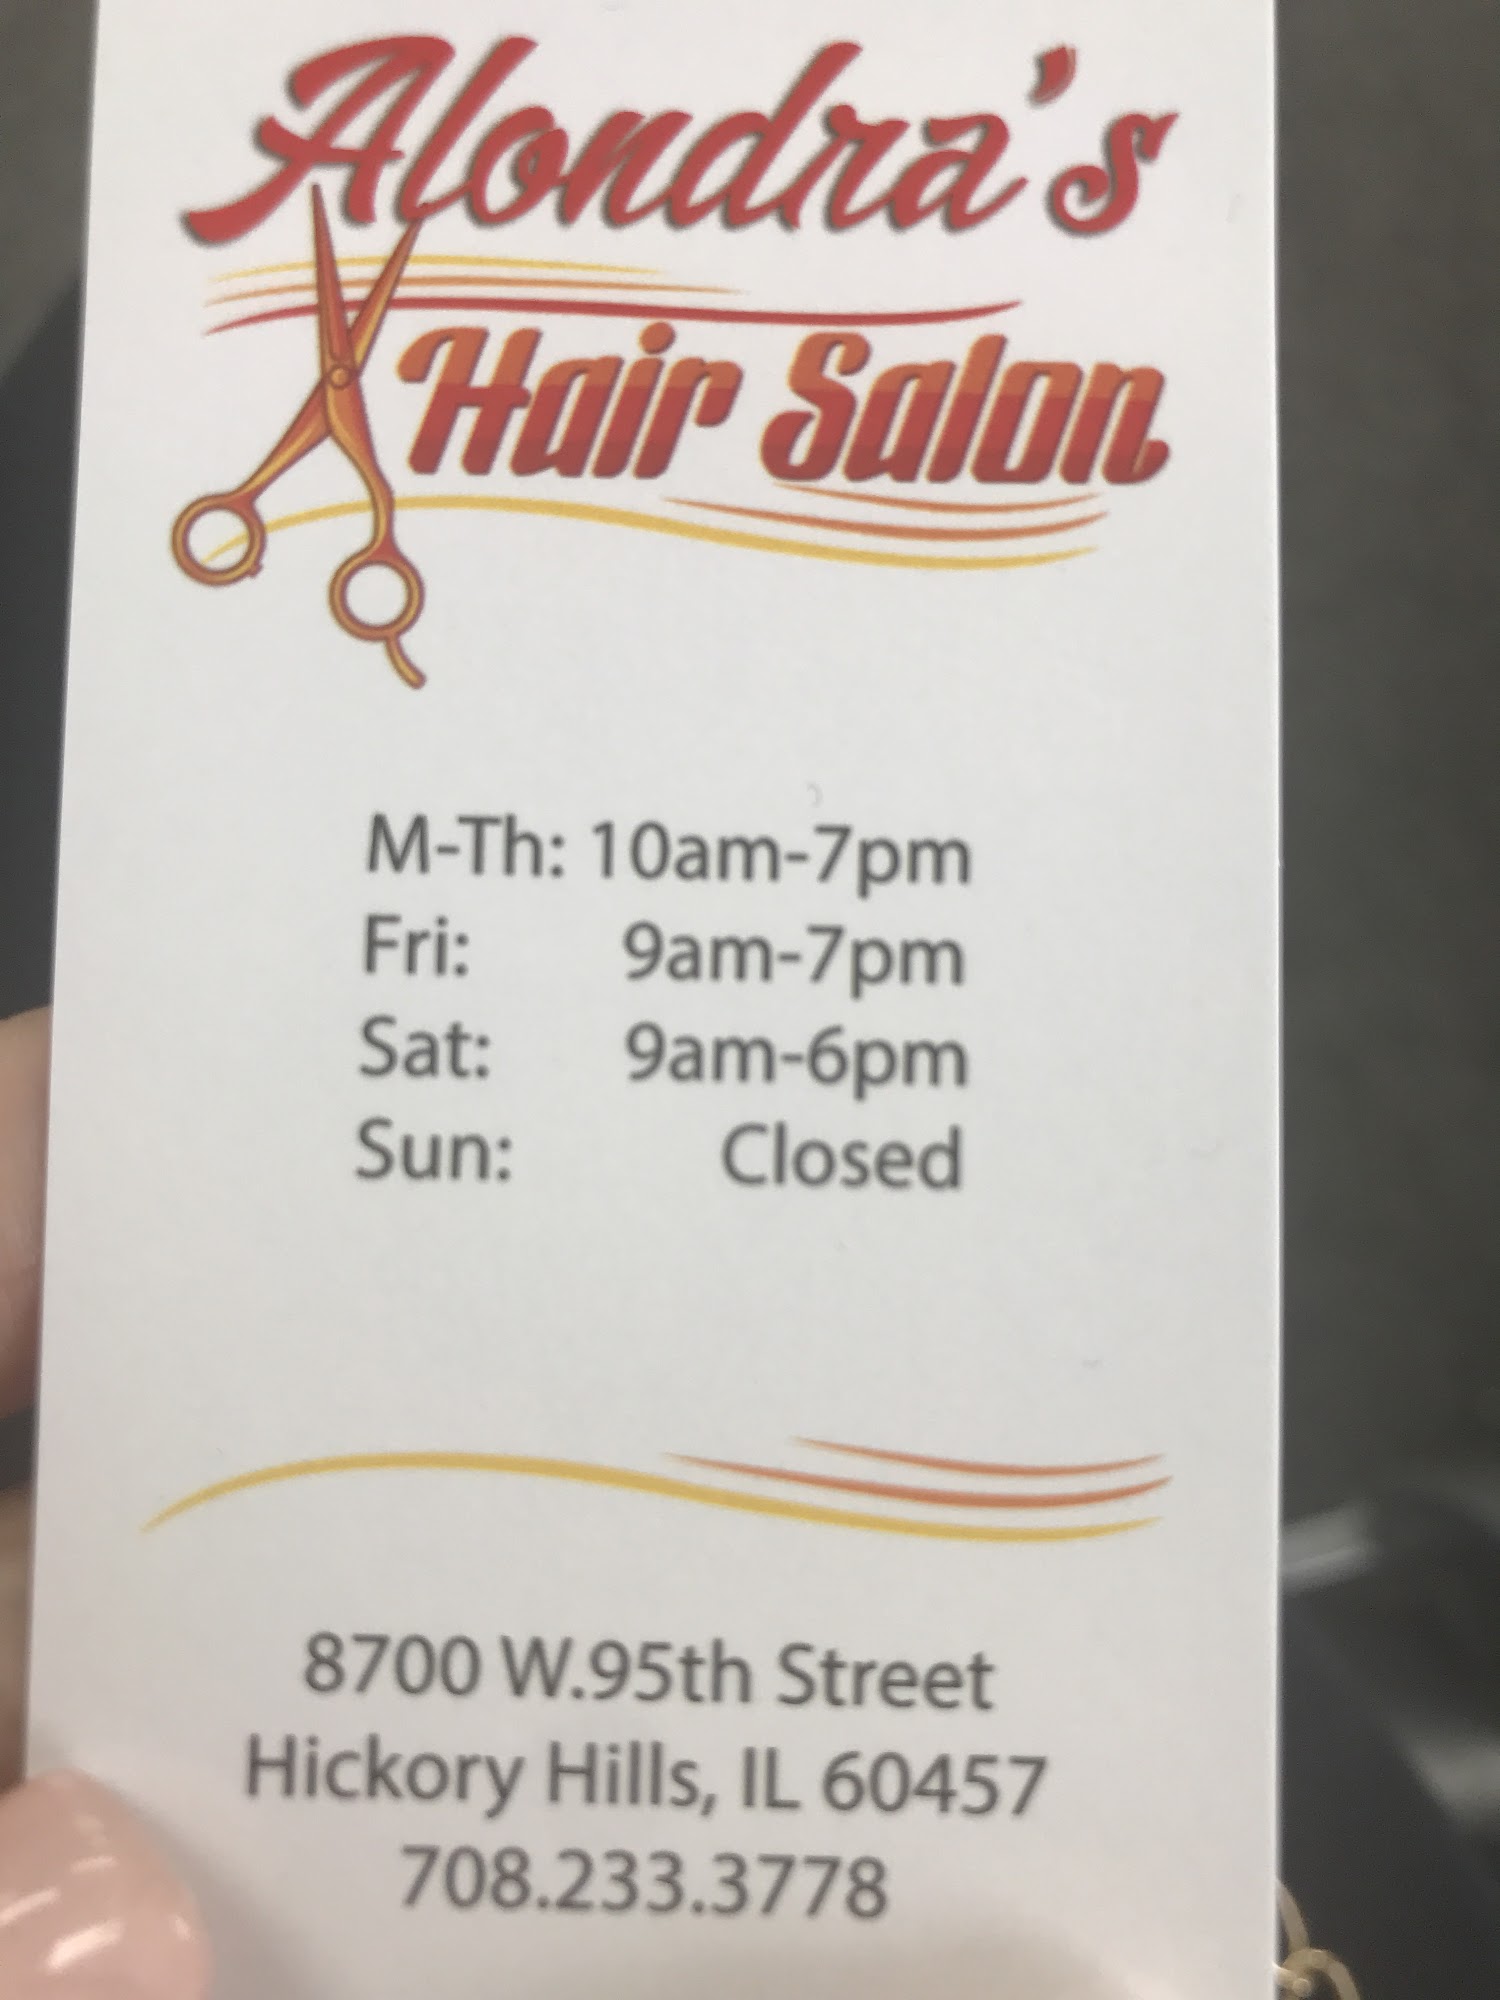 Alondra's Hair Salon 8700 95th St, Hickory Hills Illinois 60457